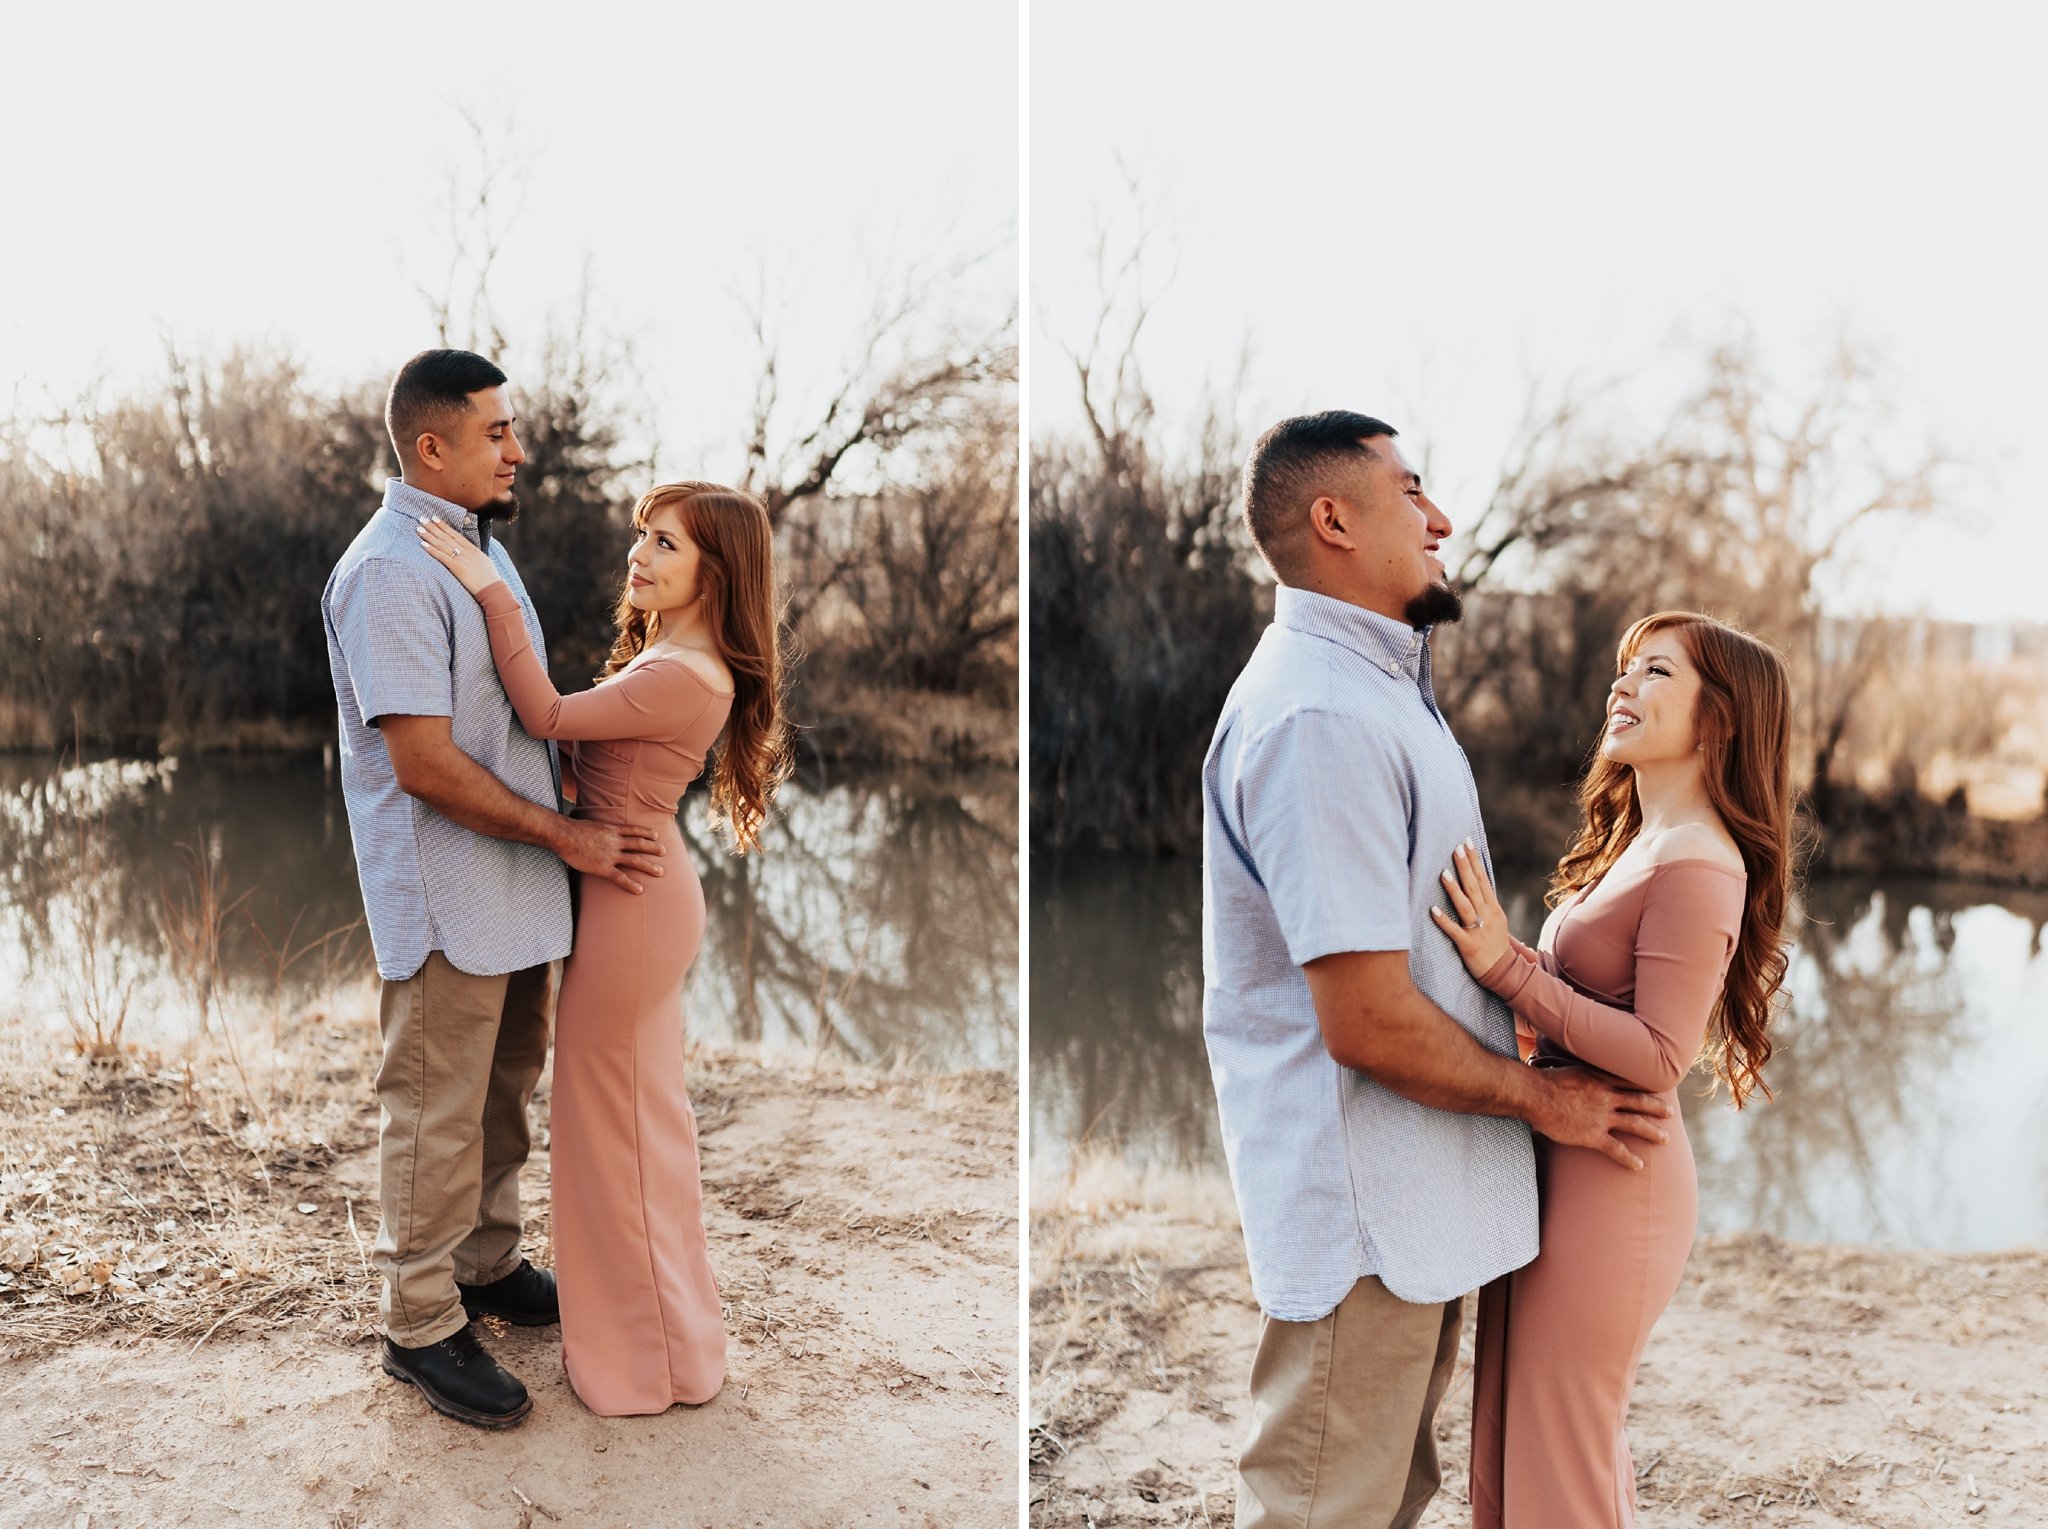 Steven + Ashley, a Dreamy New Mexico Engagement — Alicia Lucia Photography Albuquerque and Santa Fe New Mexico Wedding and Portrait Photographer